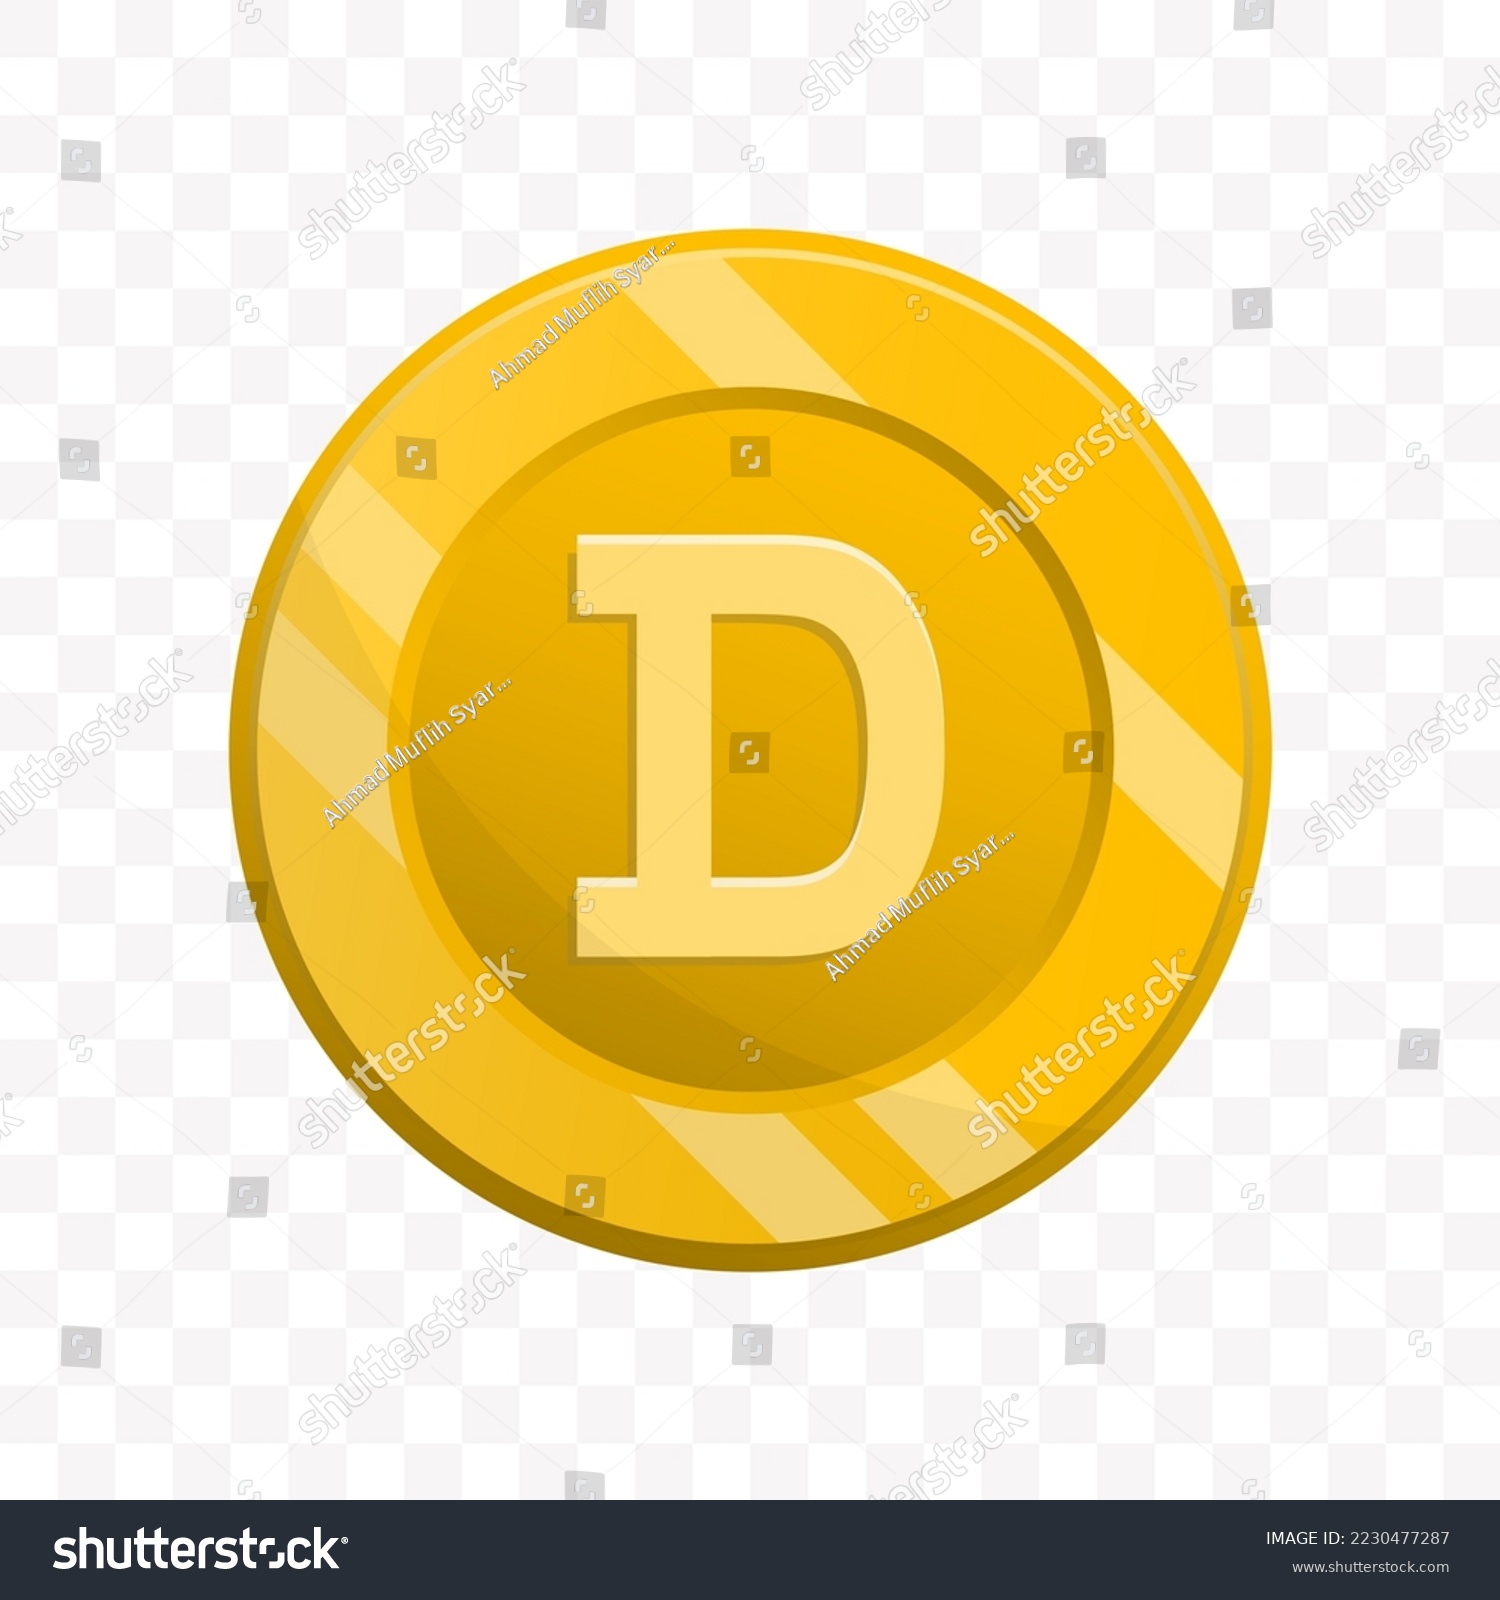 SVG of Vector illustration of Dogecoin  coin in gold color on transparent background (PNG). svg